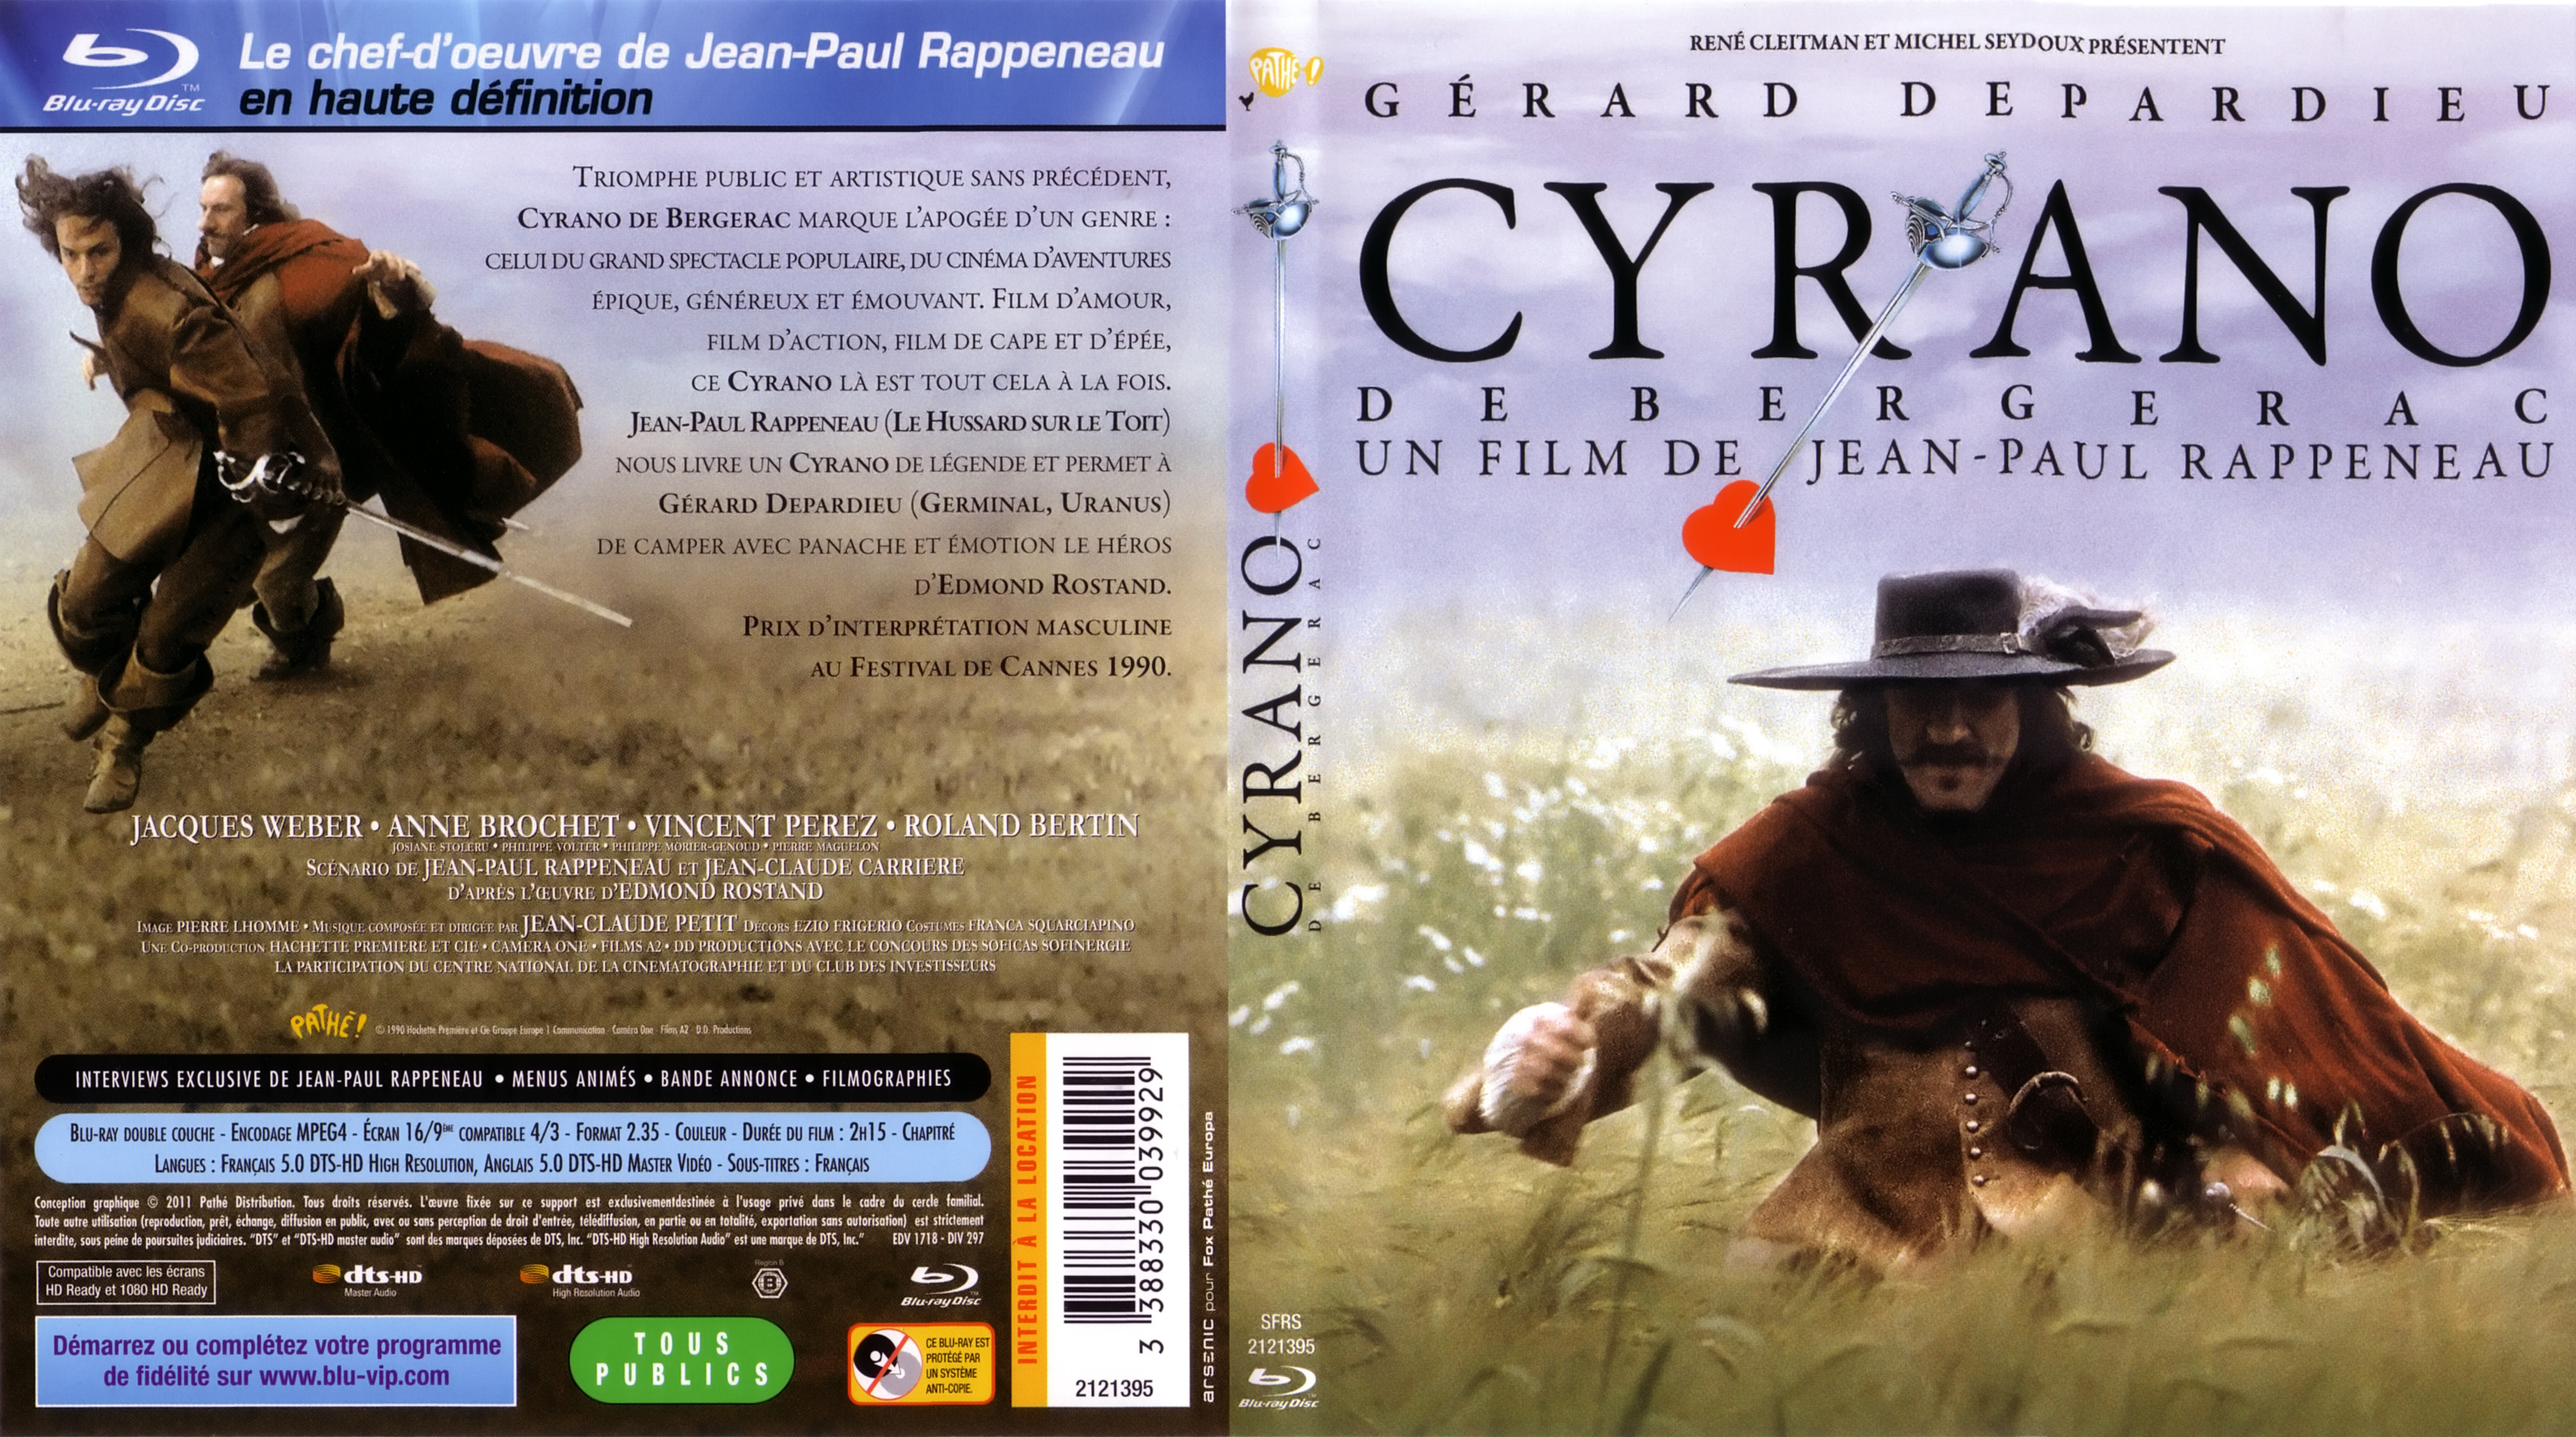 Jaquette DVD Cyrano de bergerac (BLU-RAY)